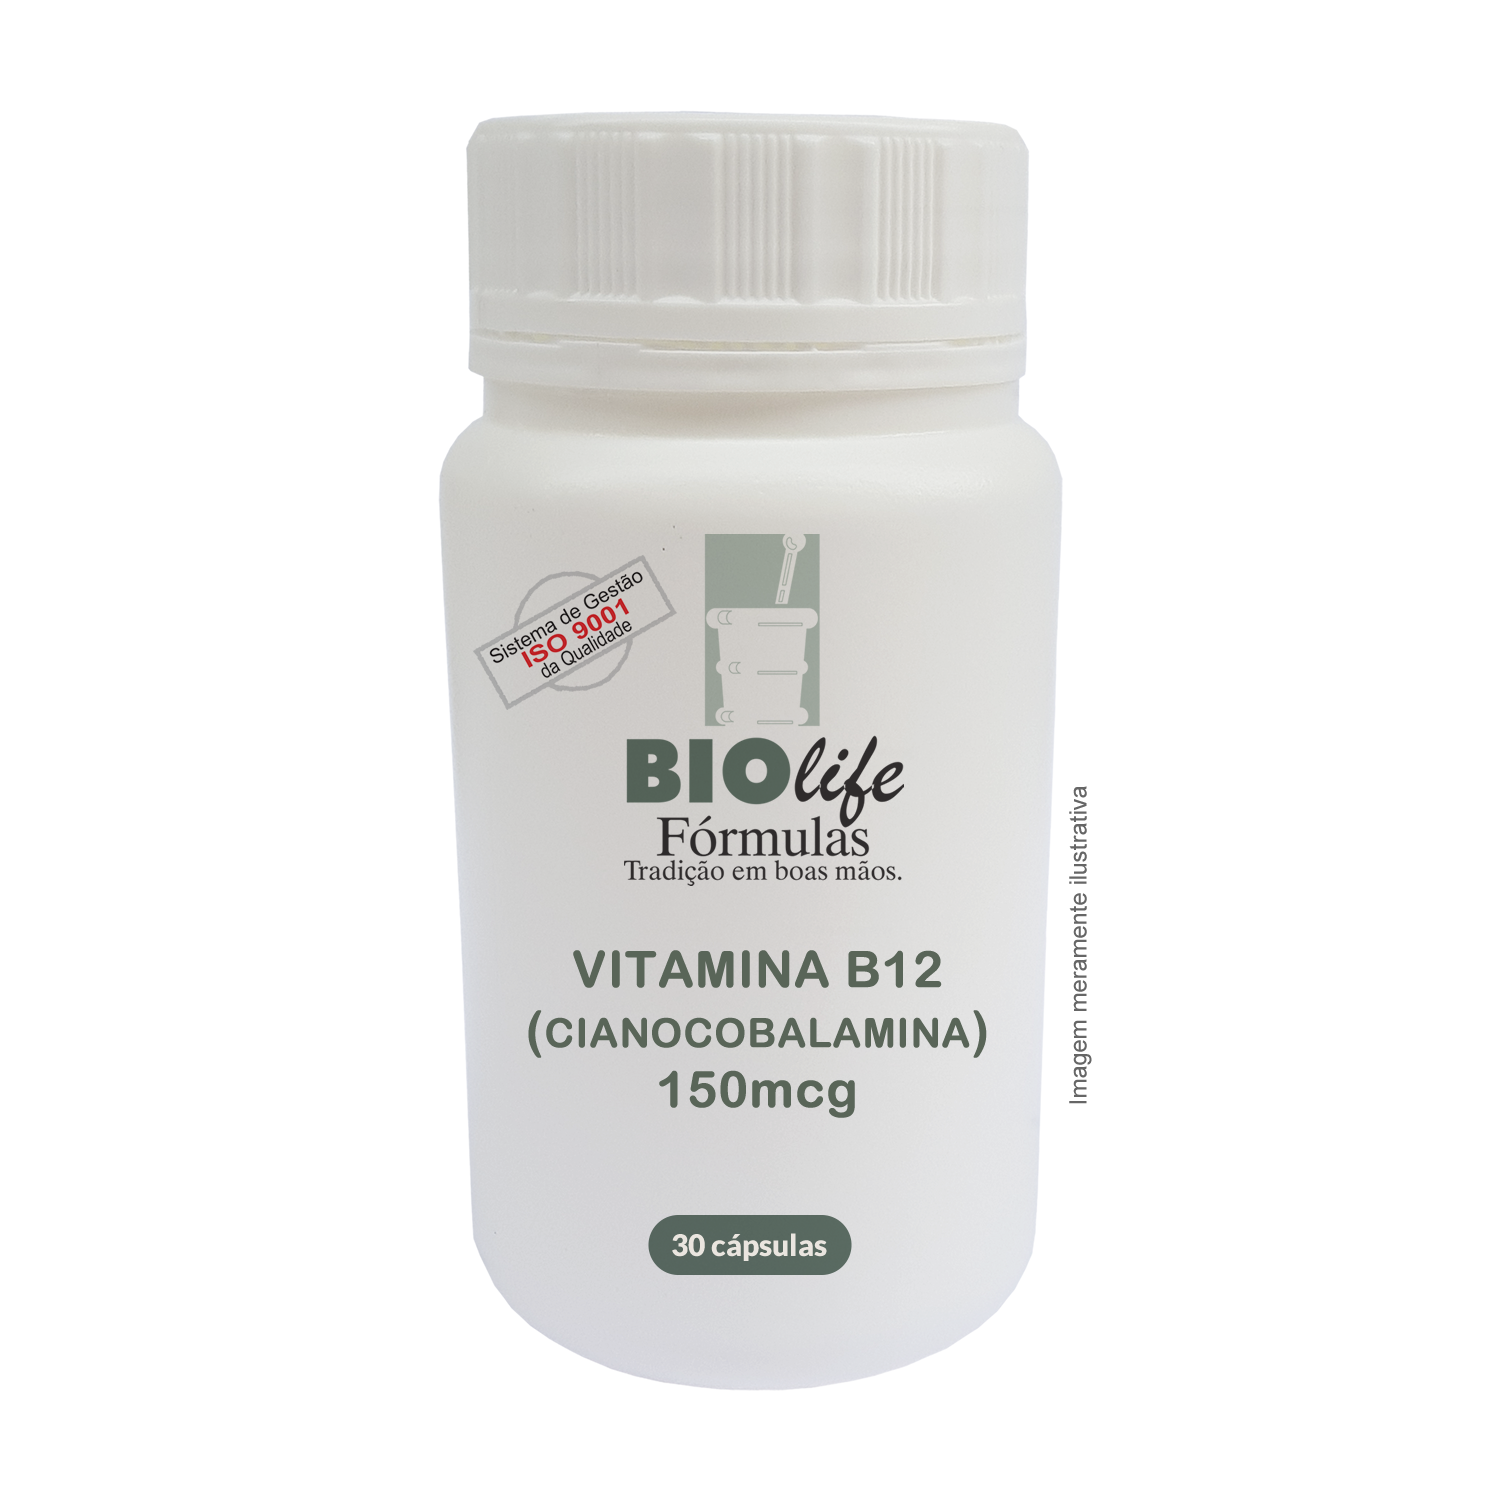 VITAMINA B12 - (CIANOCOBALAMINA ) - 150mcg em 30 cápsula - BioLife